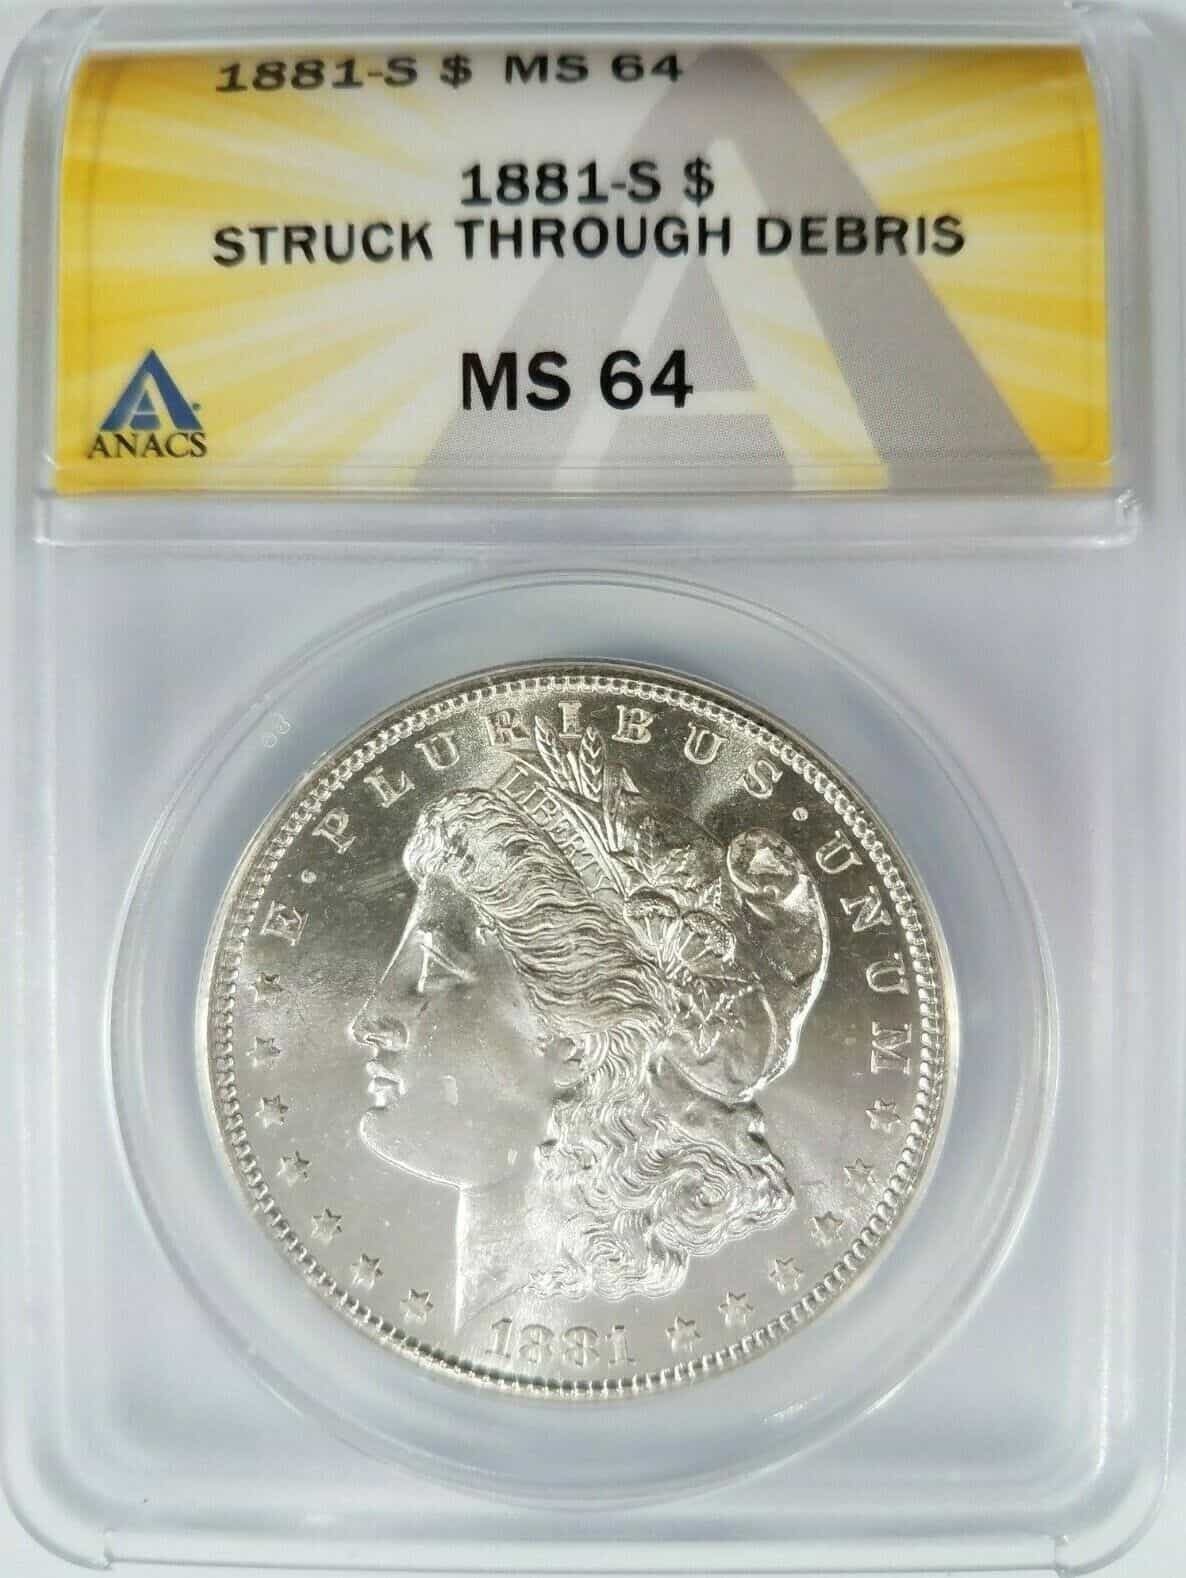 1881 Silver Dollar Struck Through Debris